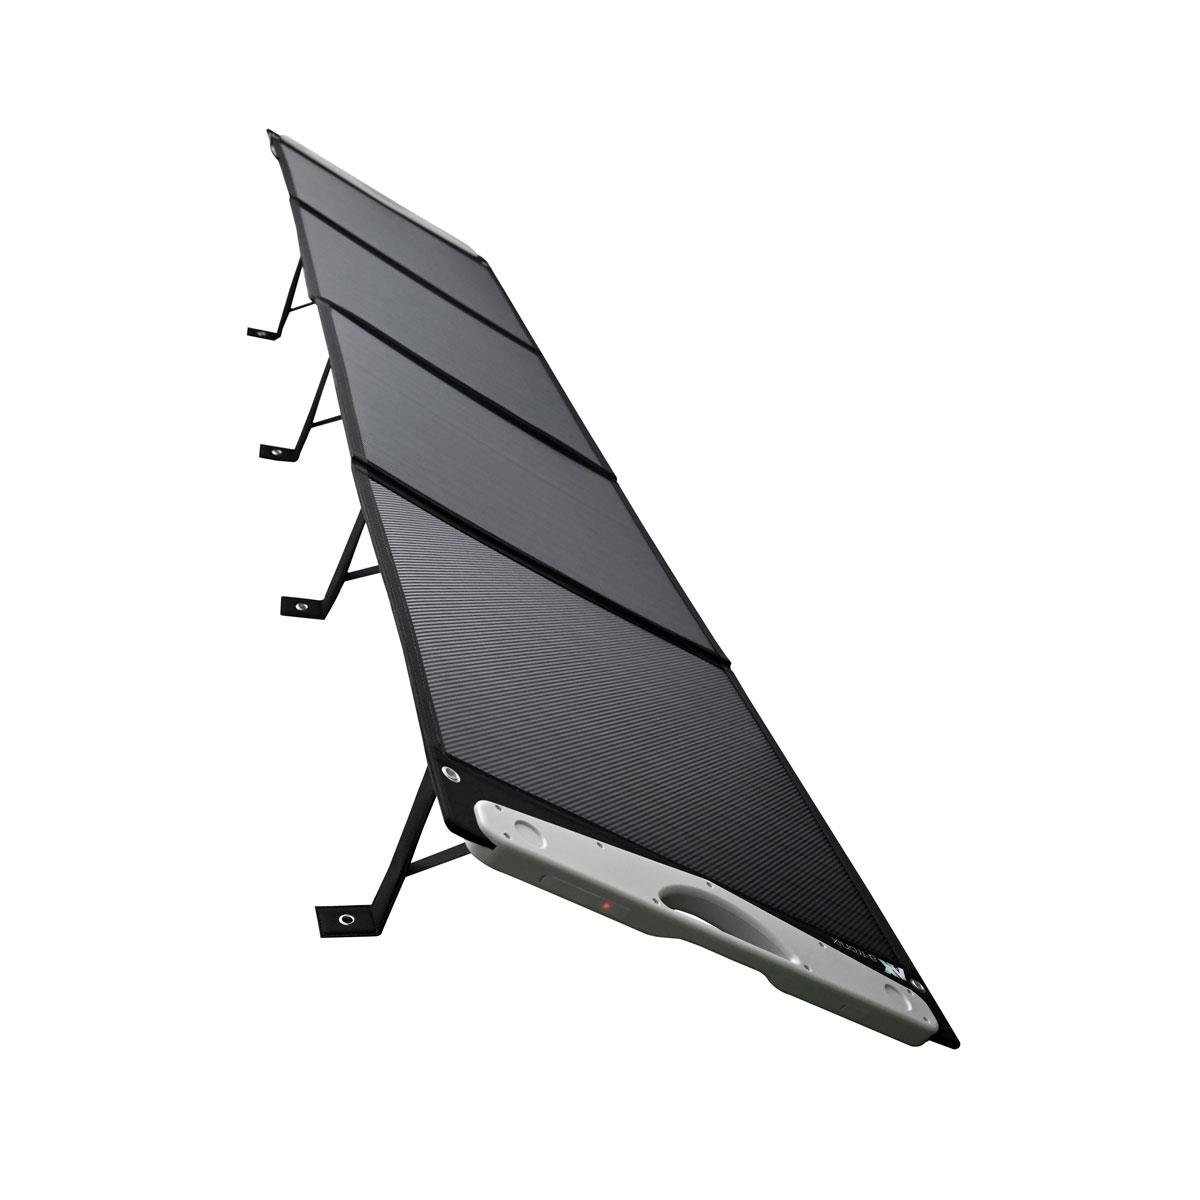 EcoFlow Delta Pro 3600Wh Portable Powerstation mit 200W Solarpanel mit USB Anschluss